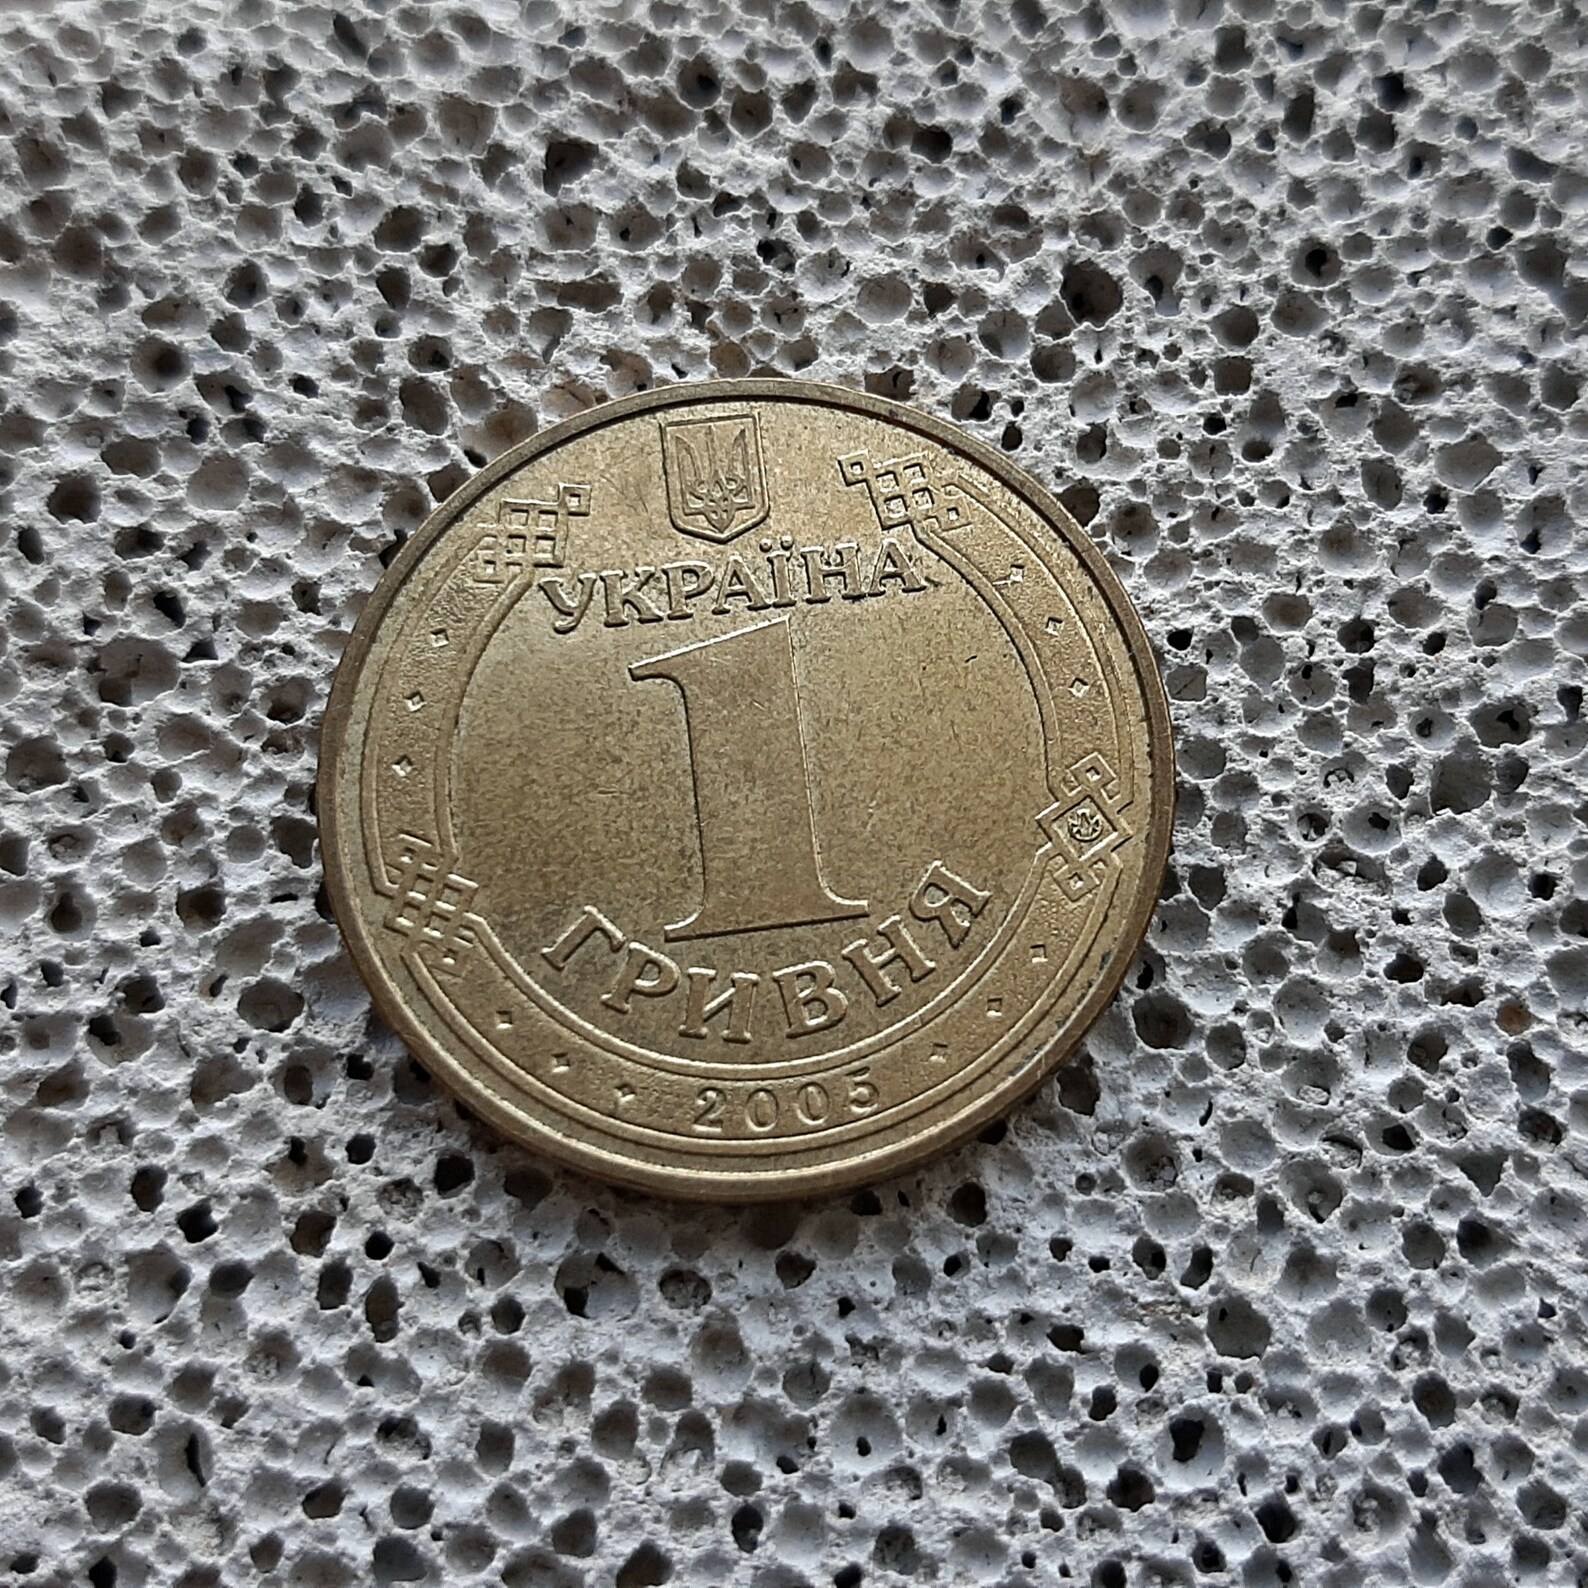 Anniversary Coin Ukraine one hryvnia Ukrainian coin old | Etsy